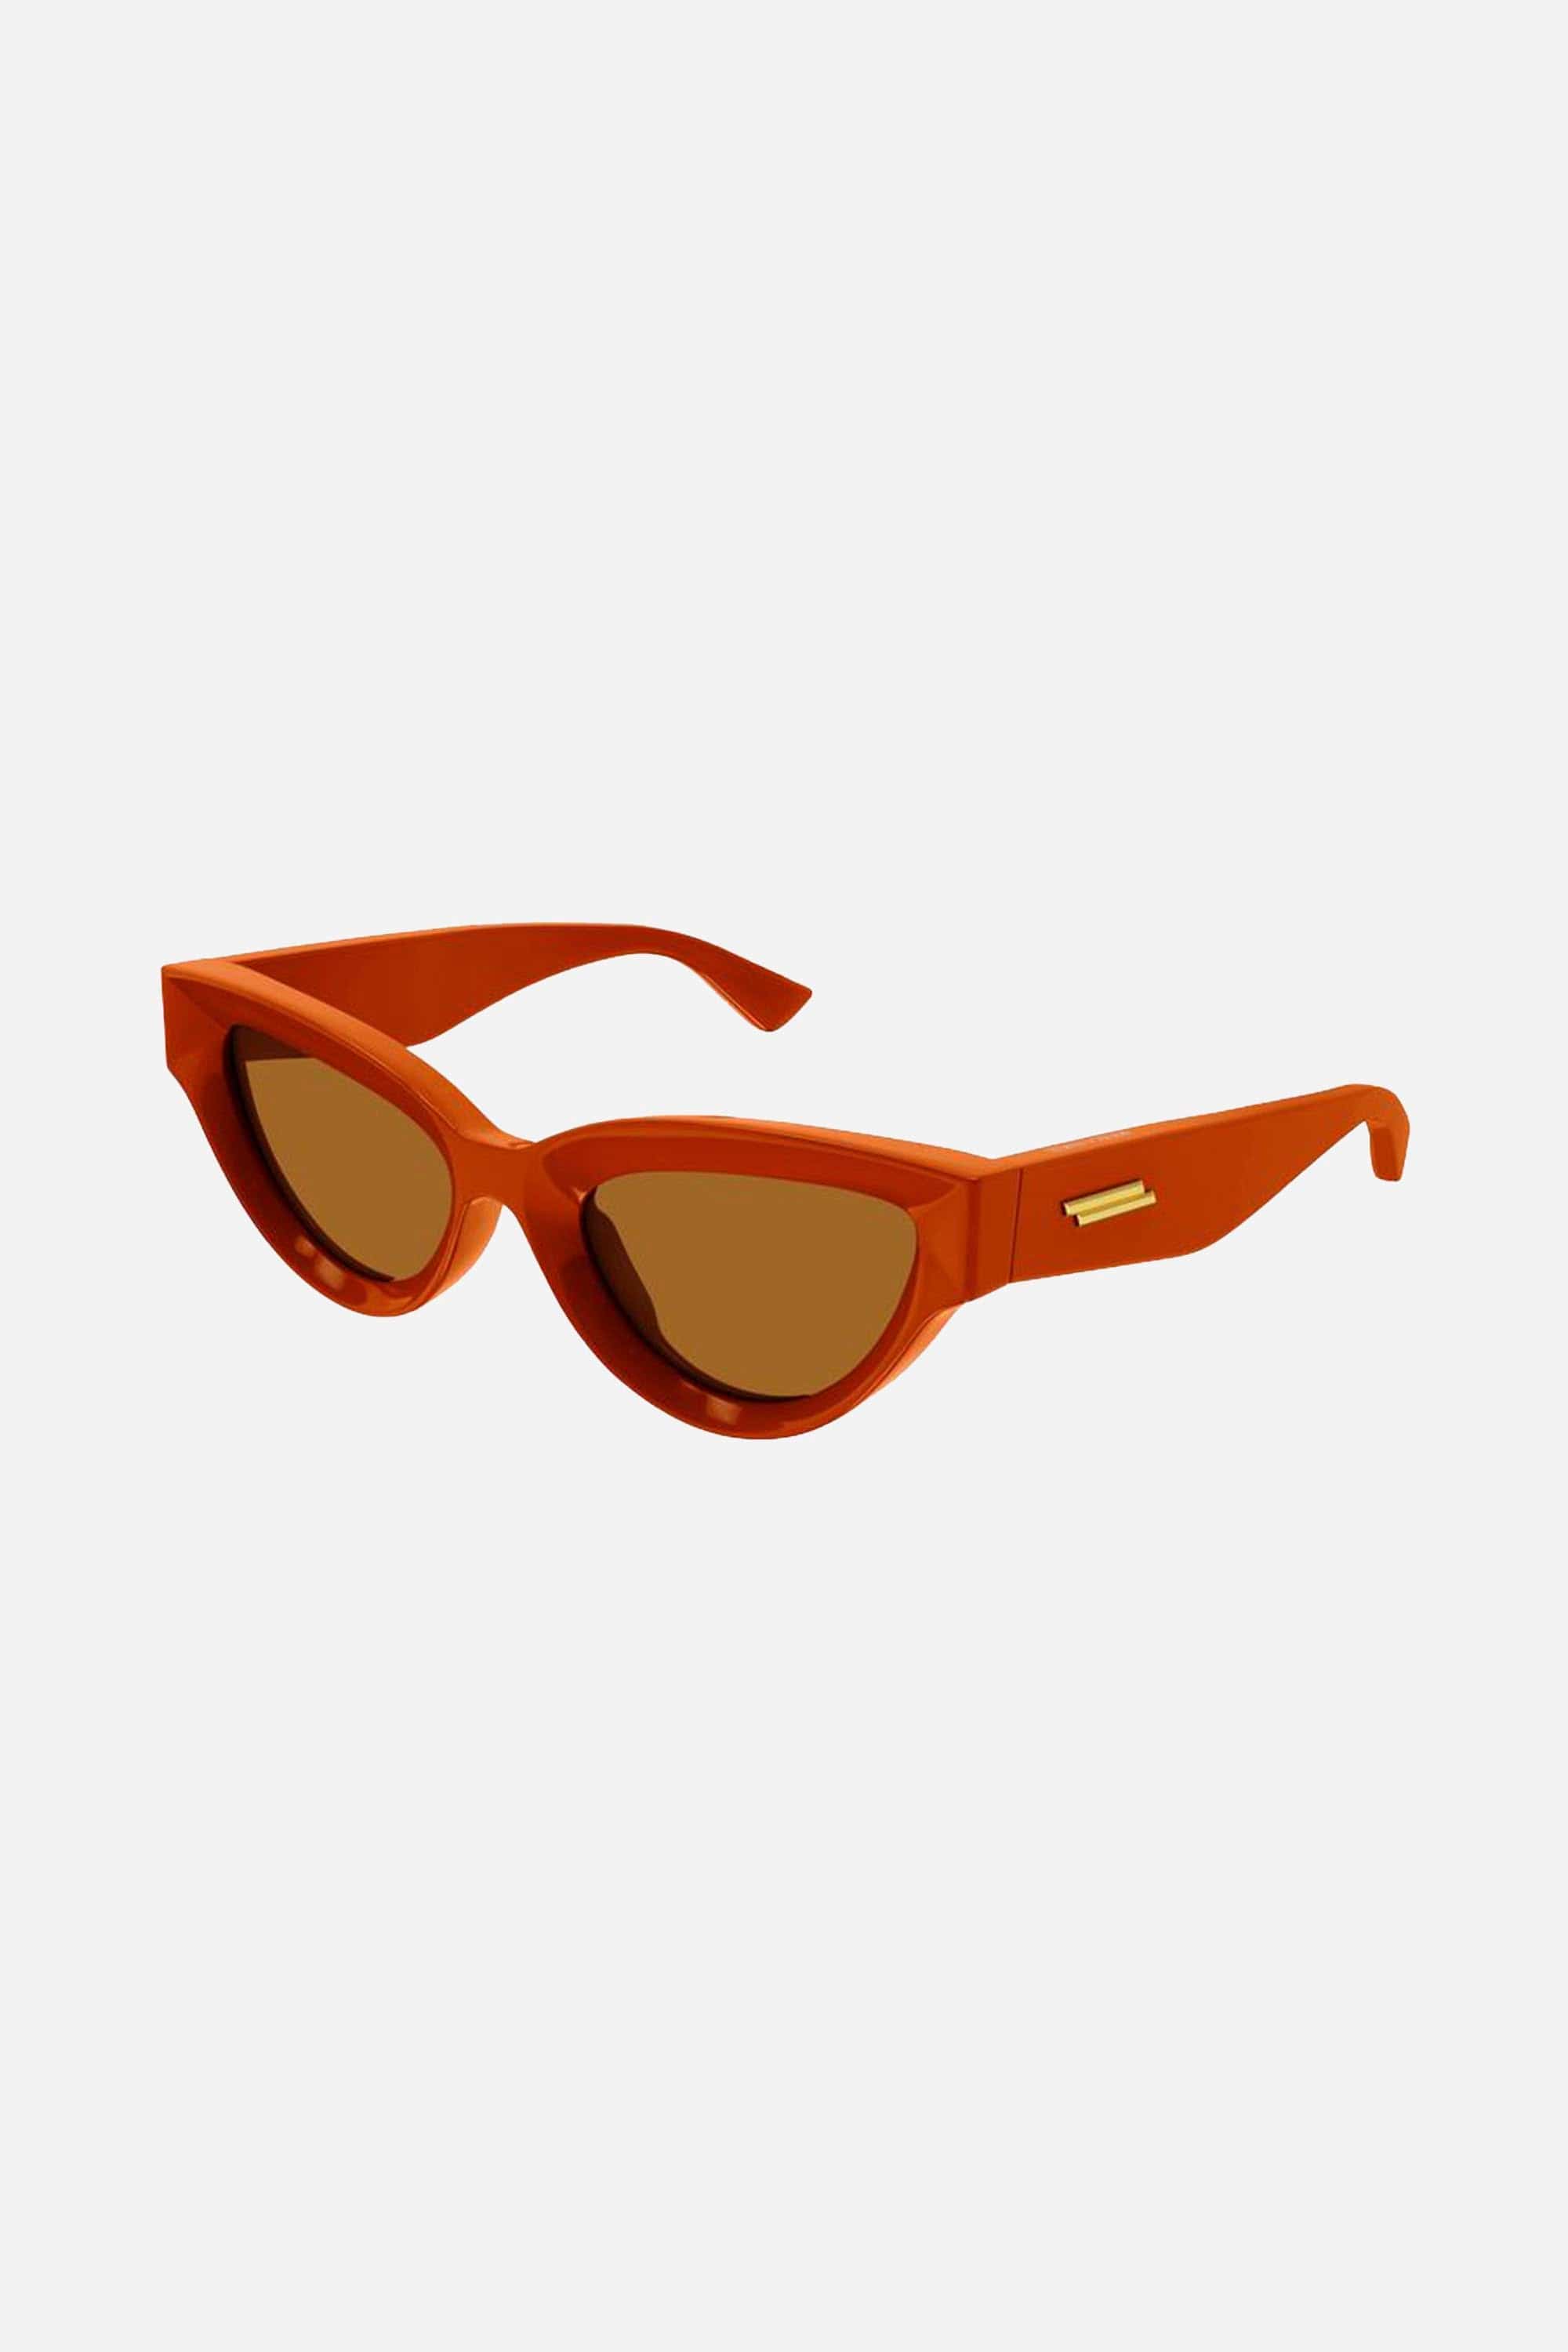 Bottega Veneta angular orange sunglasses - Eyewear Club